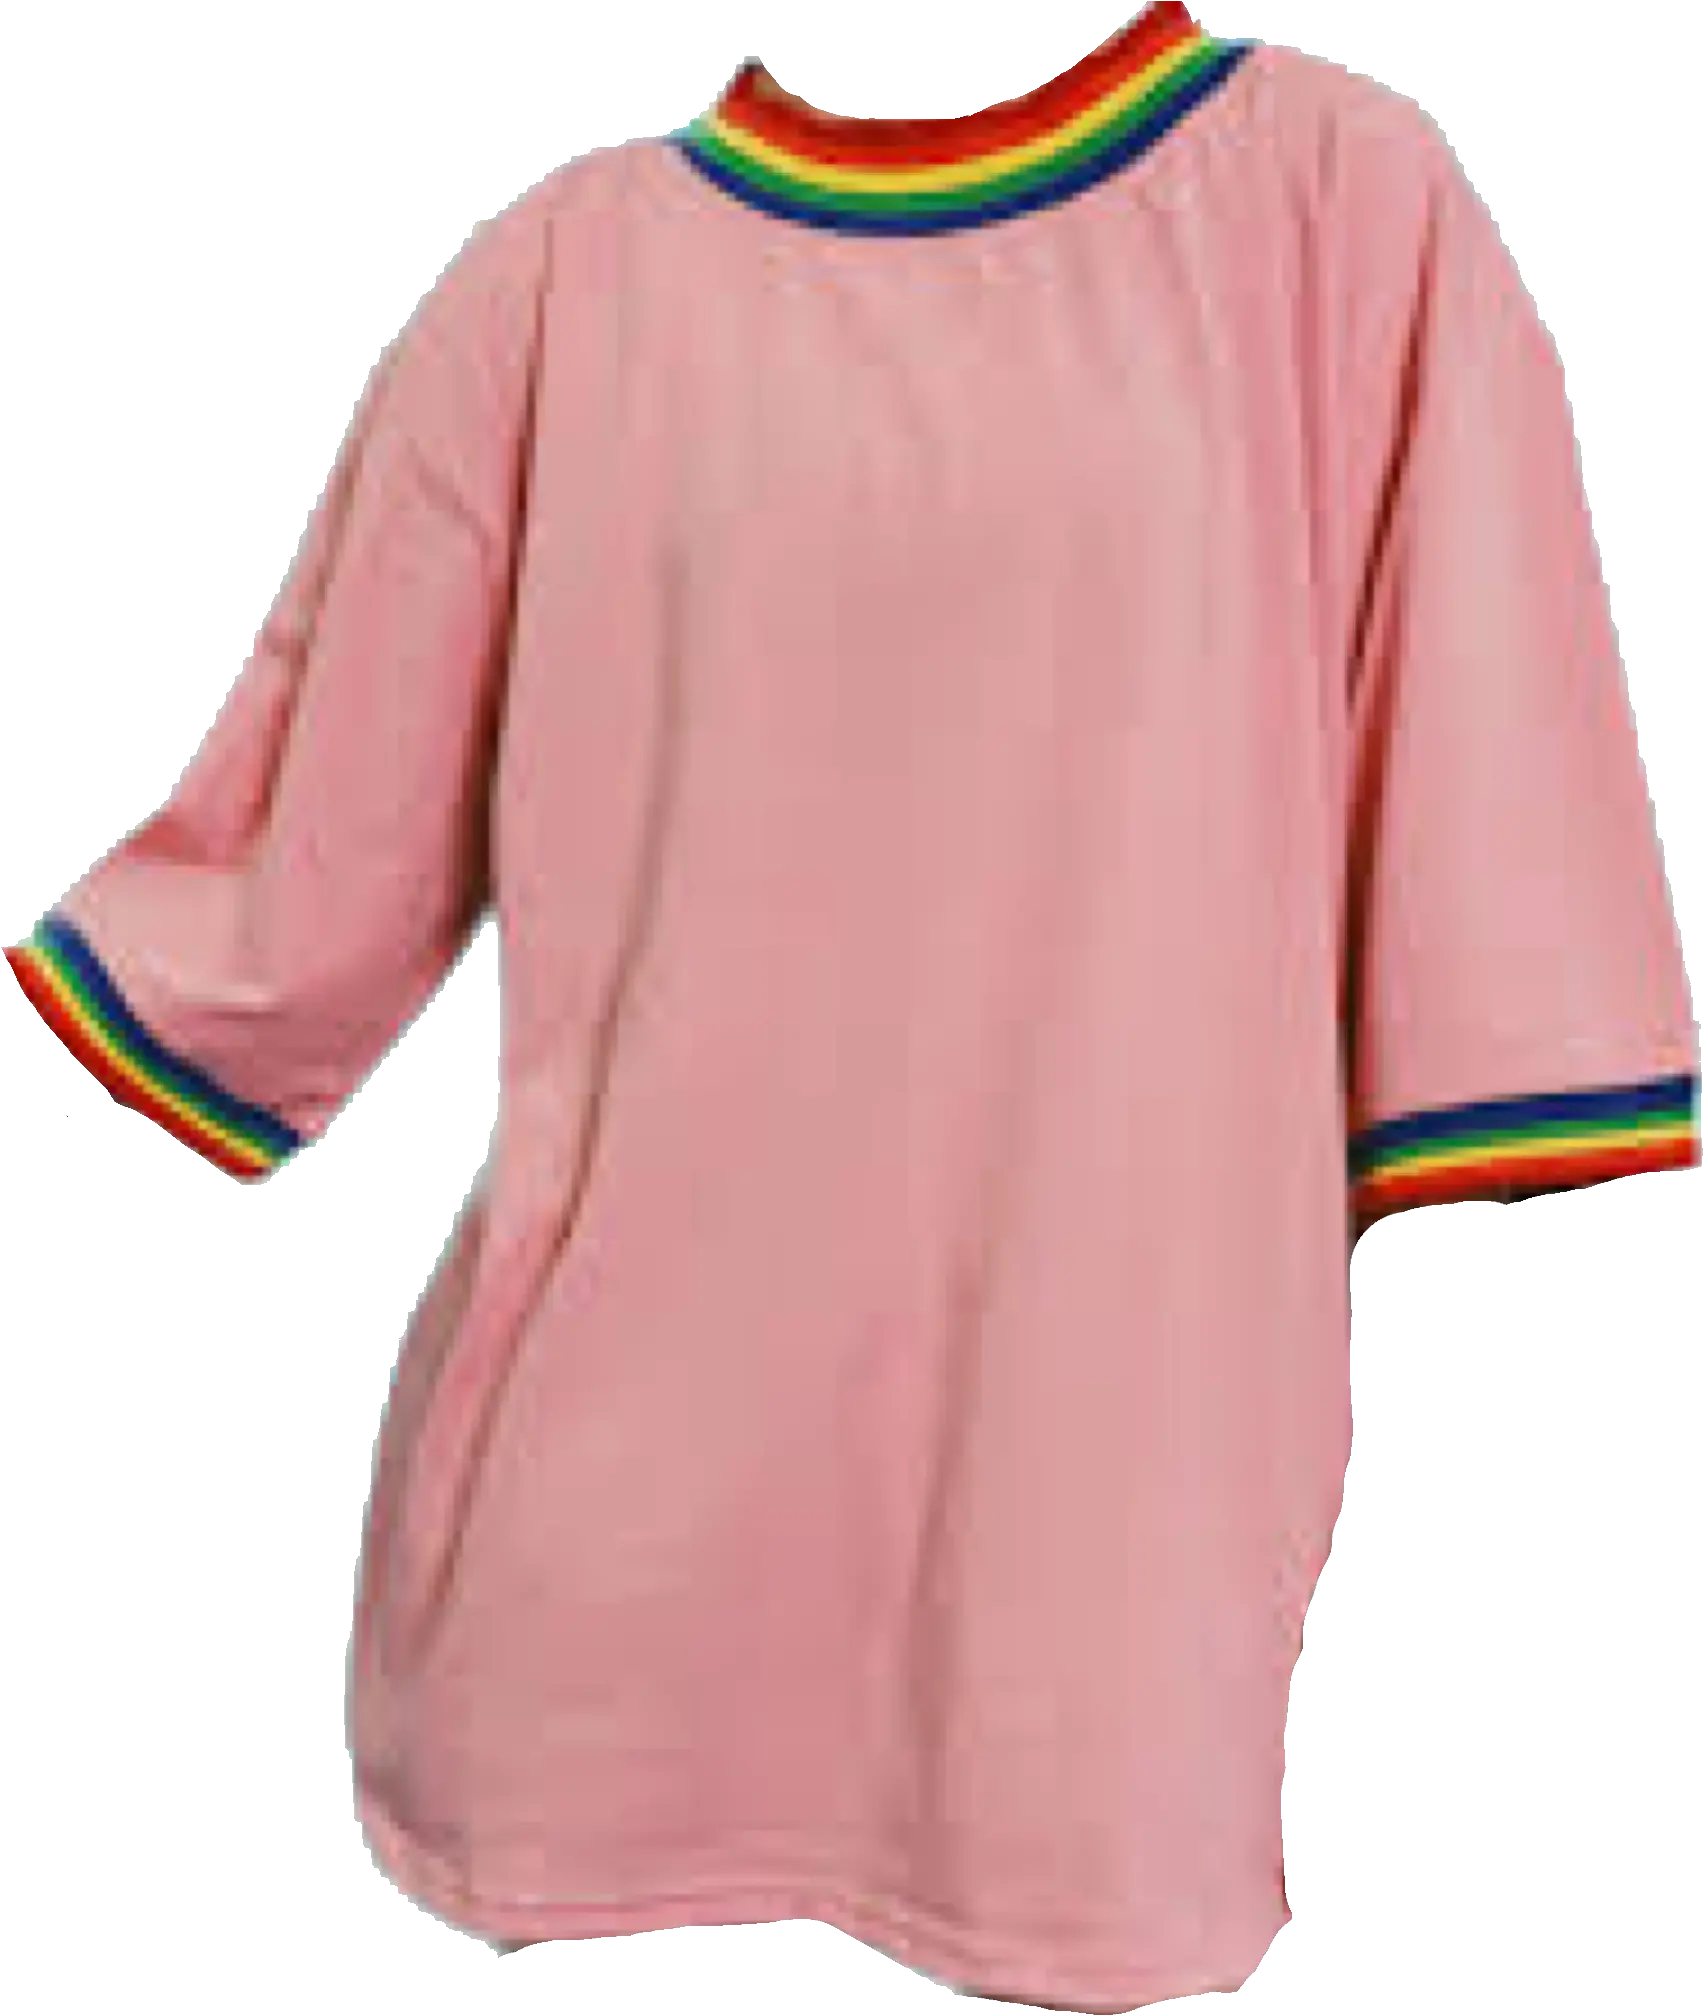 Hd Pink Rainbow Top Shirt Polyvore Png Clothes Cloth Png